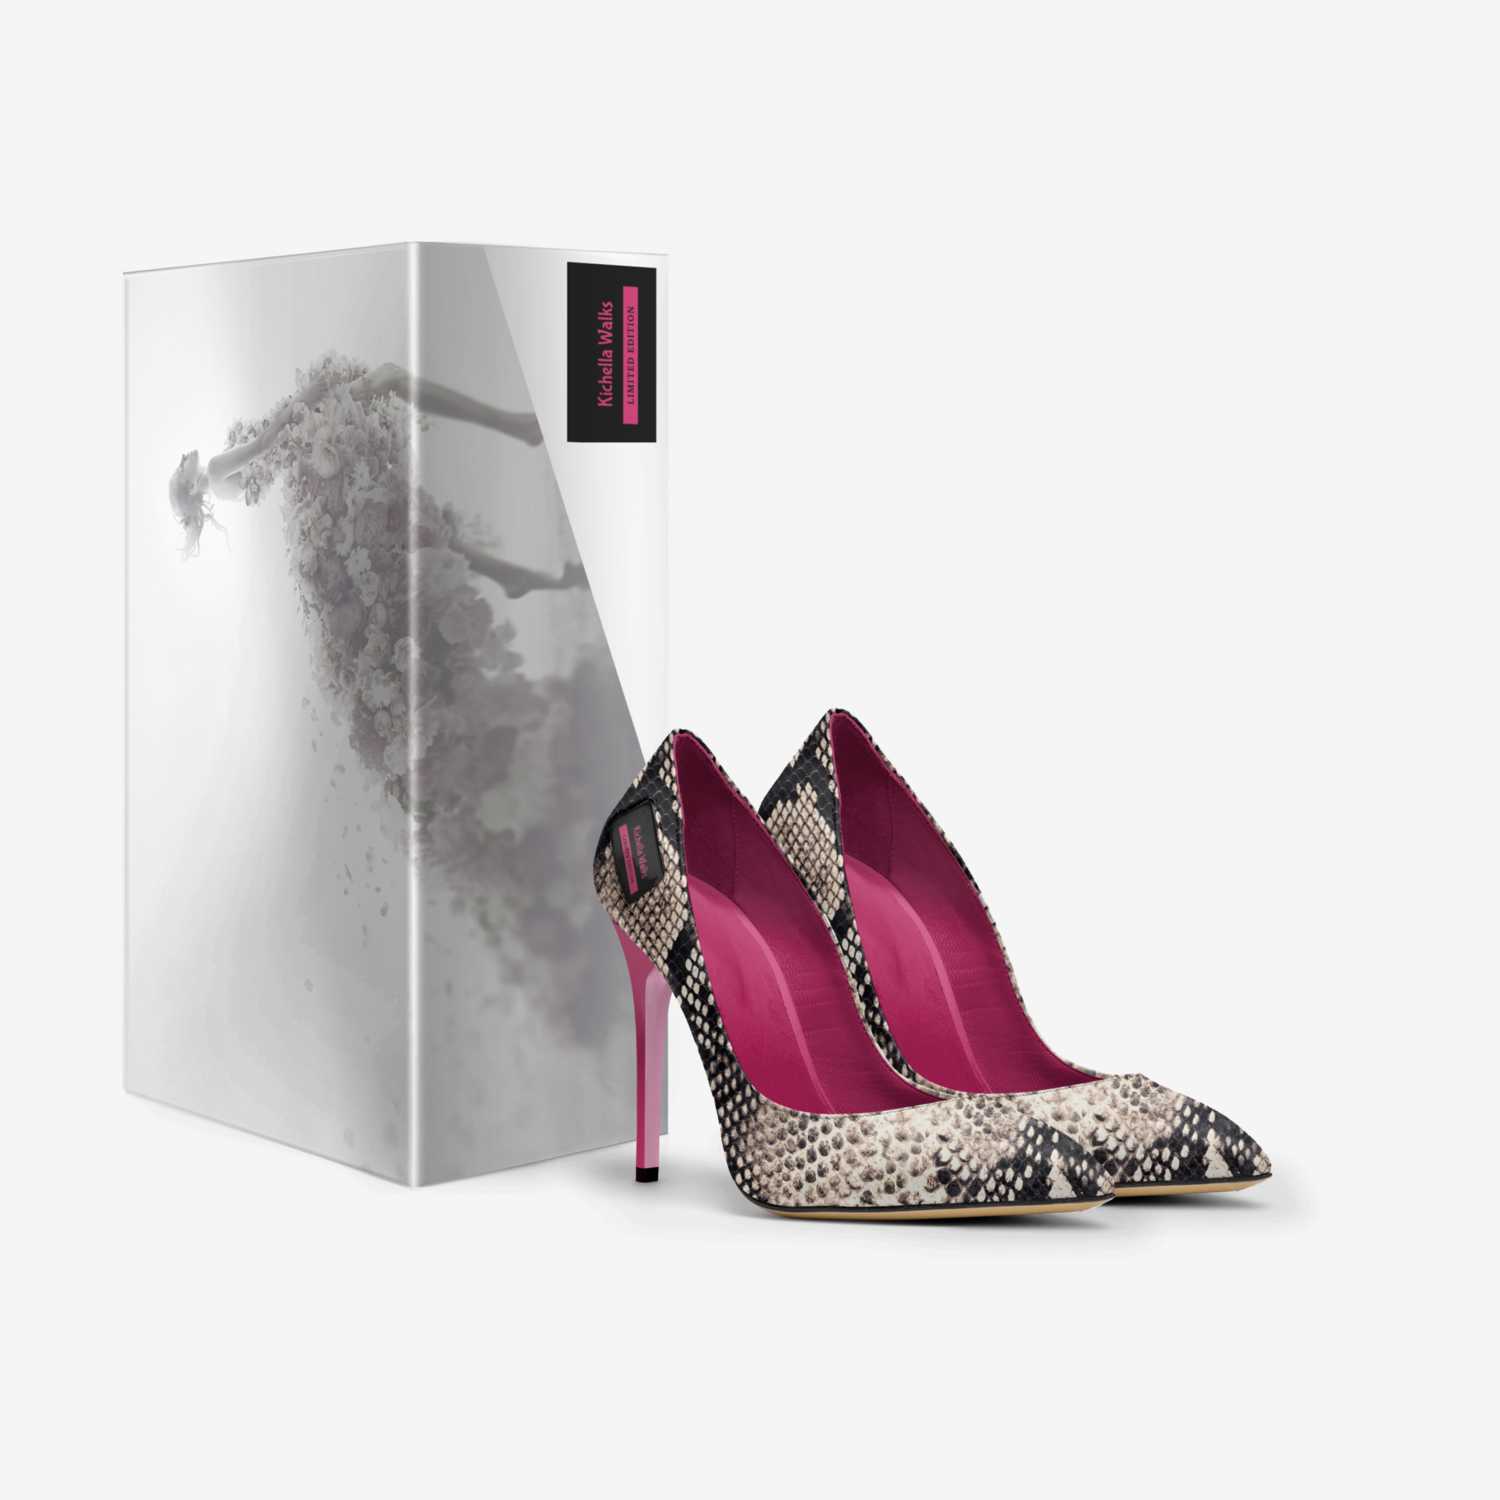 Kichella Walks custom made in Italy shoes by Kichella Karoar | Box view